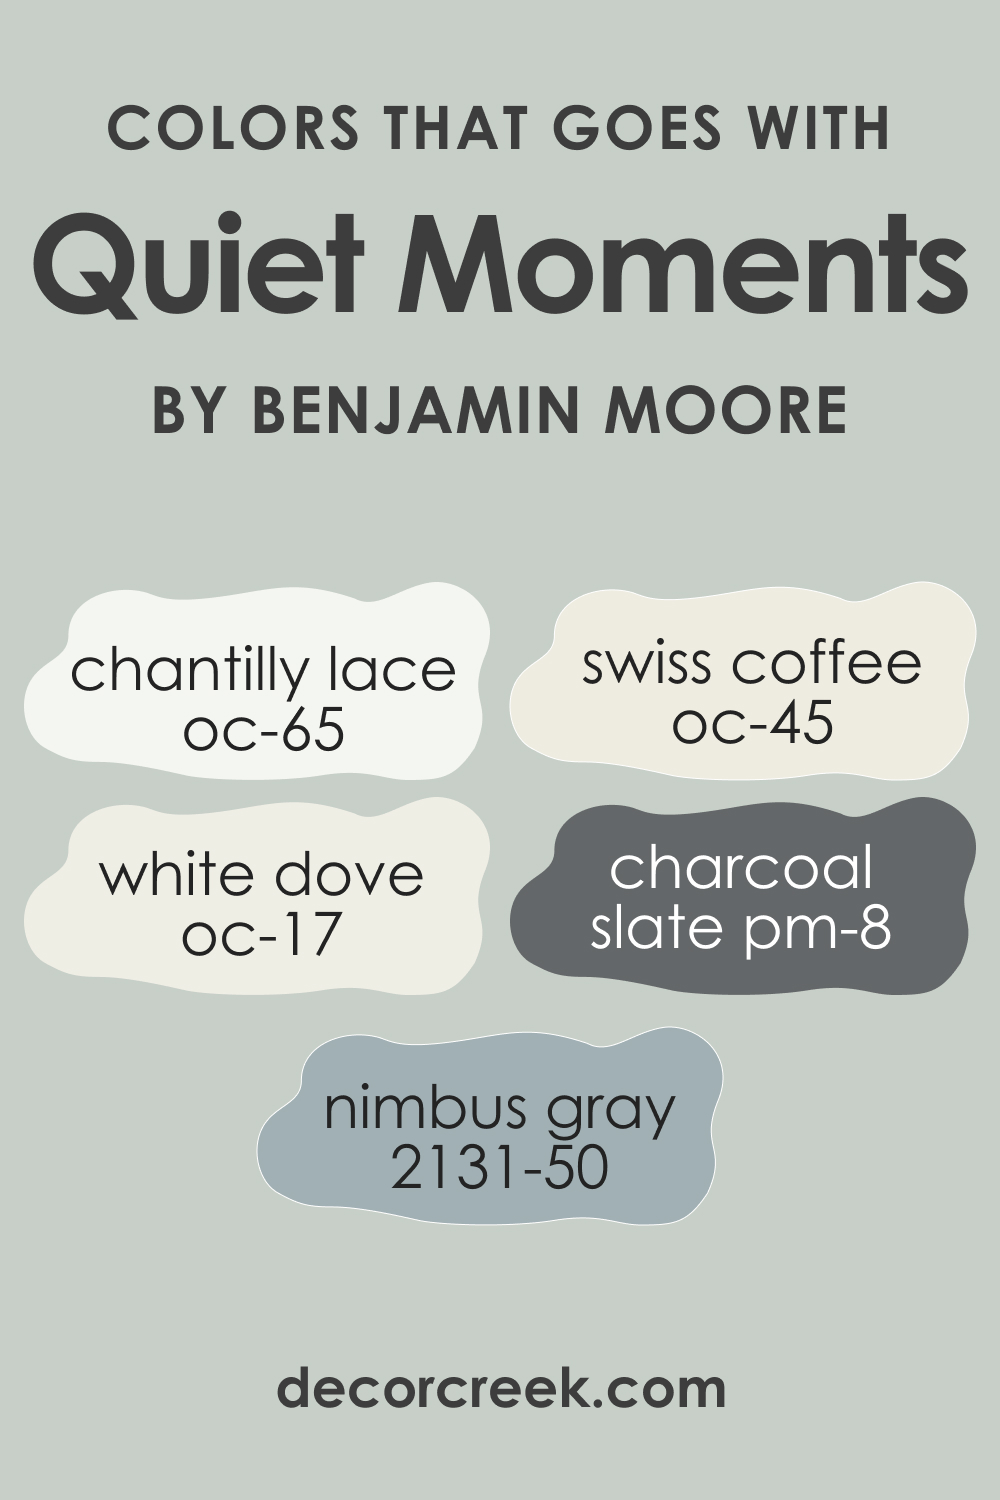 Colors That Go With BM Quiet Moments